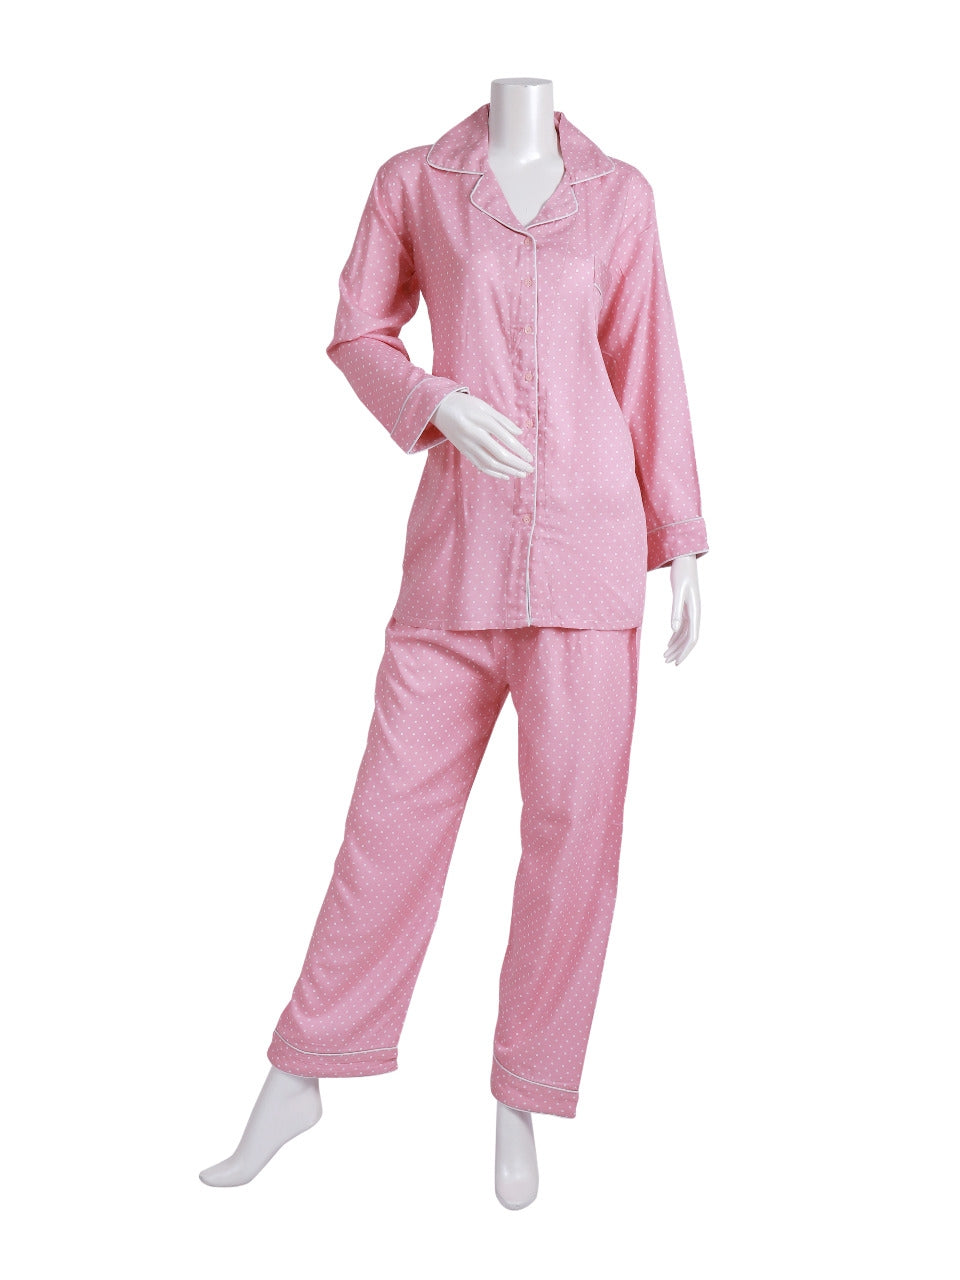 Women's Pink Night Suit - ACE 38001 (S20)